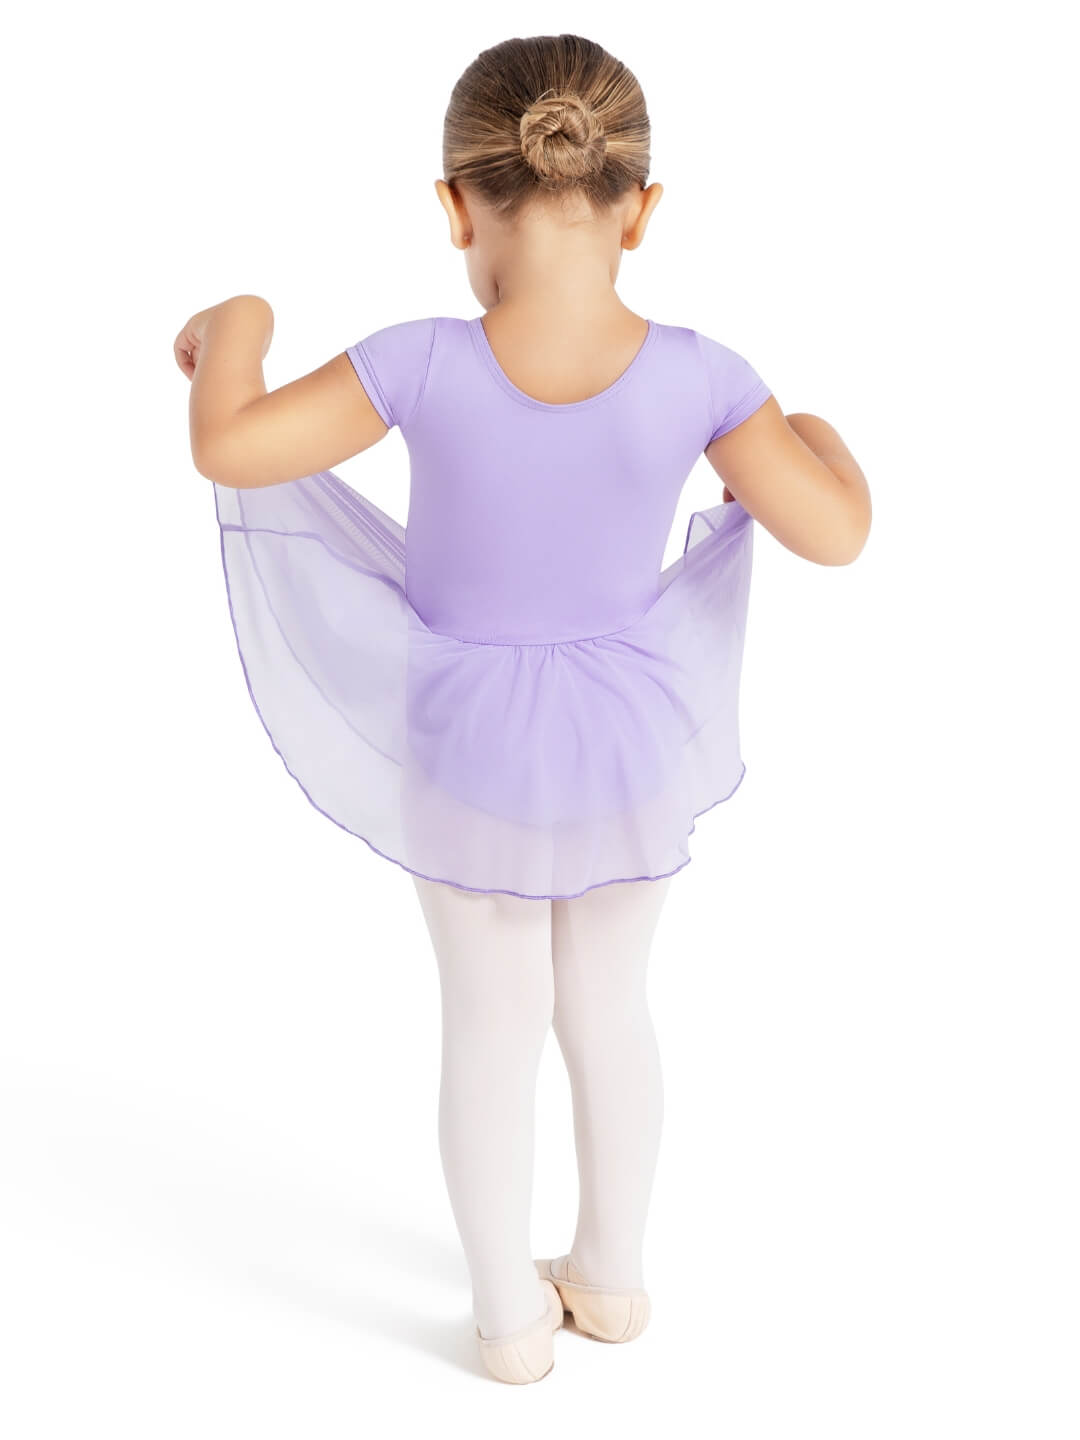 Capezio Short Sleeve Dress Child SE1037C